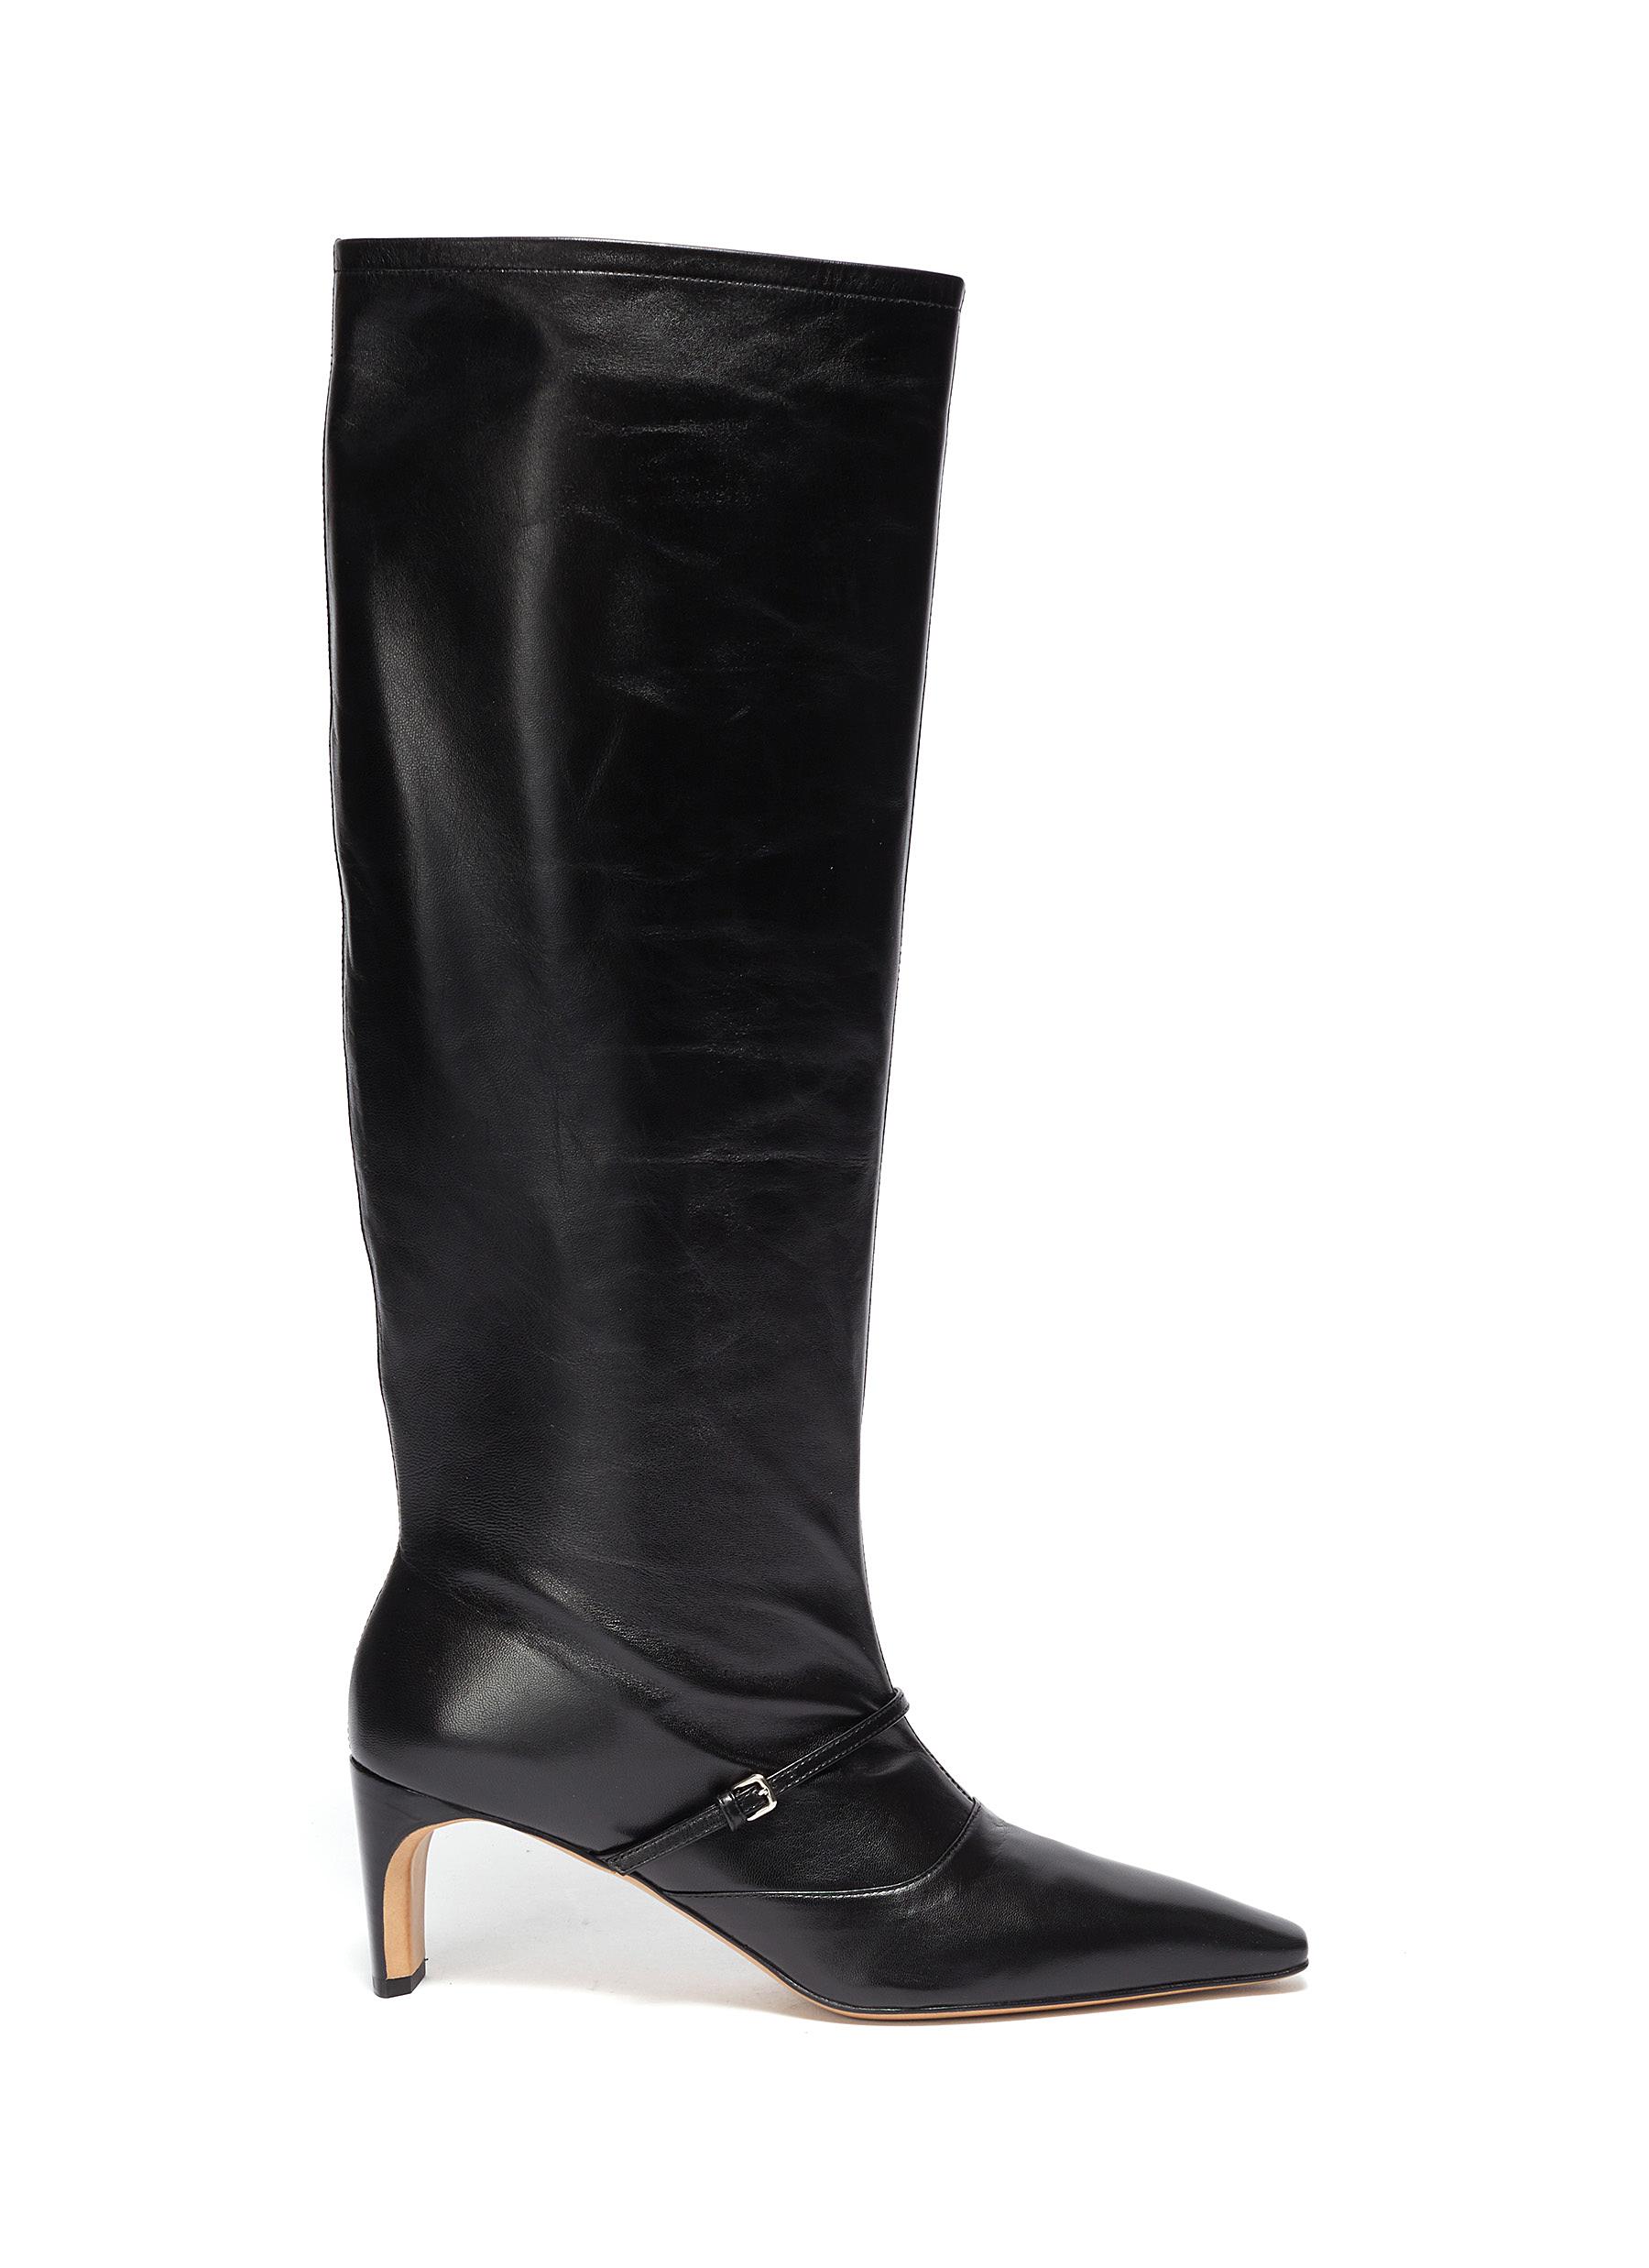 black leather knee high boots flat heel